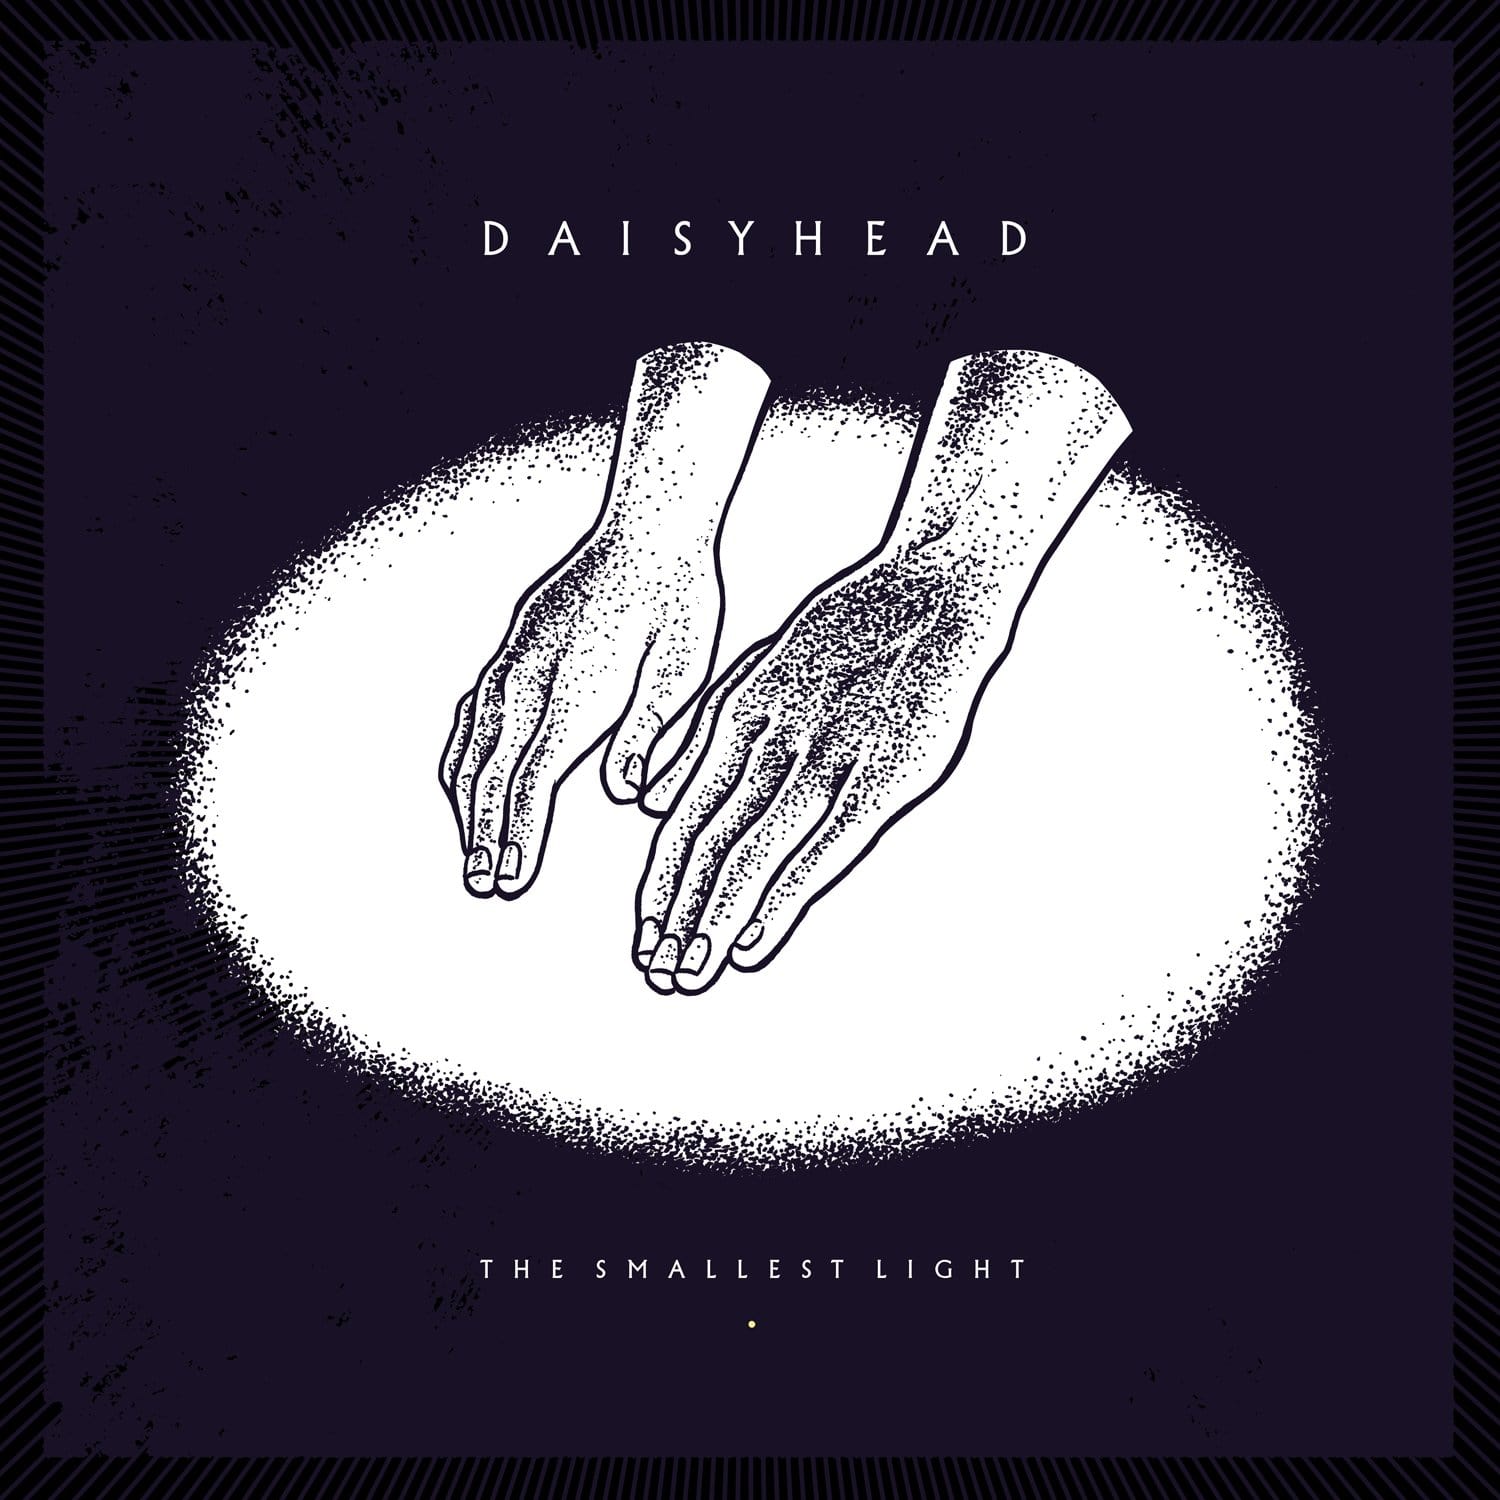 The Smallest Light - NO SLEEP RECORDS - Daisyhead